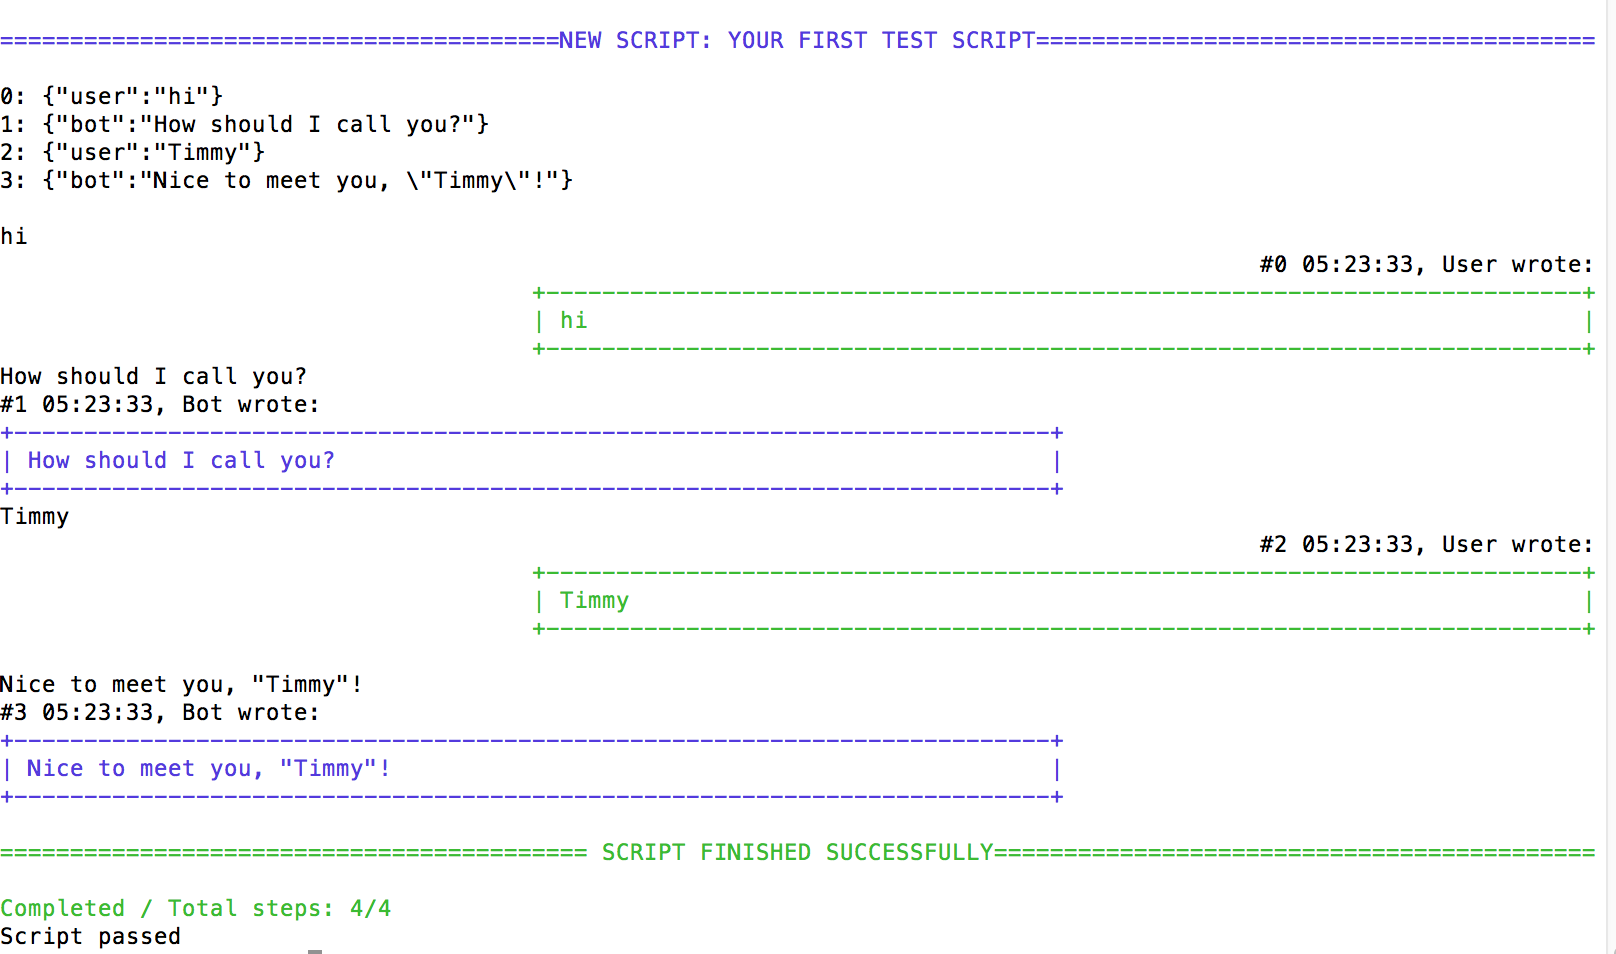 Script output for sample script